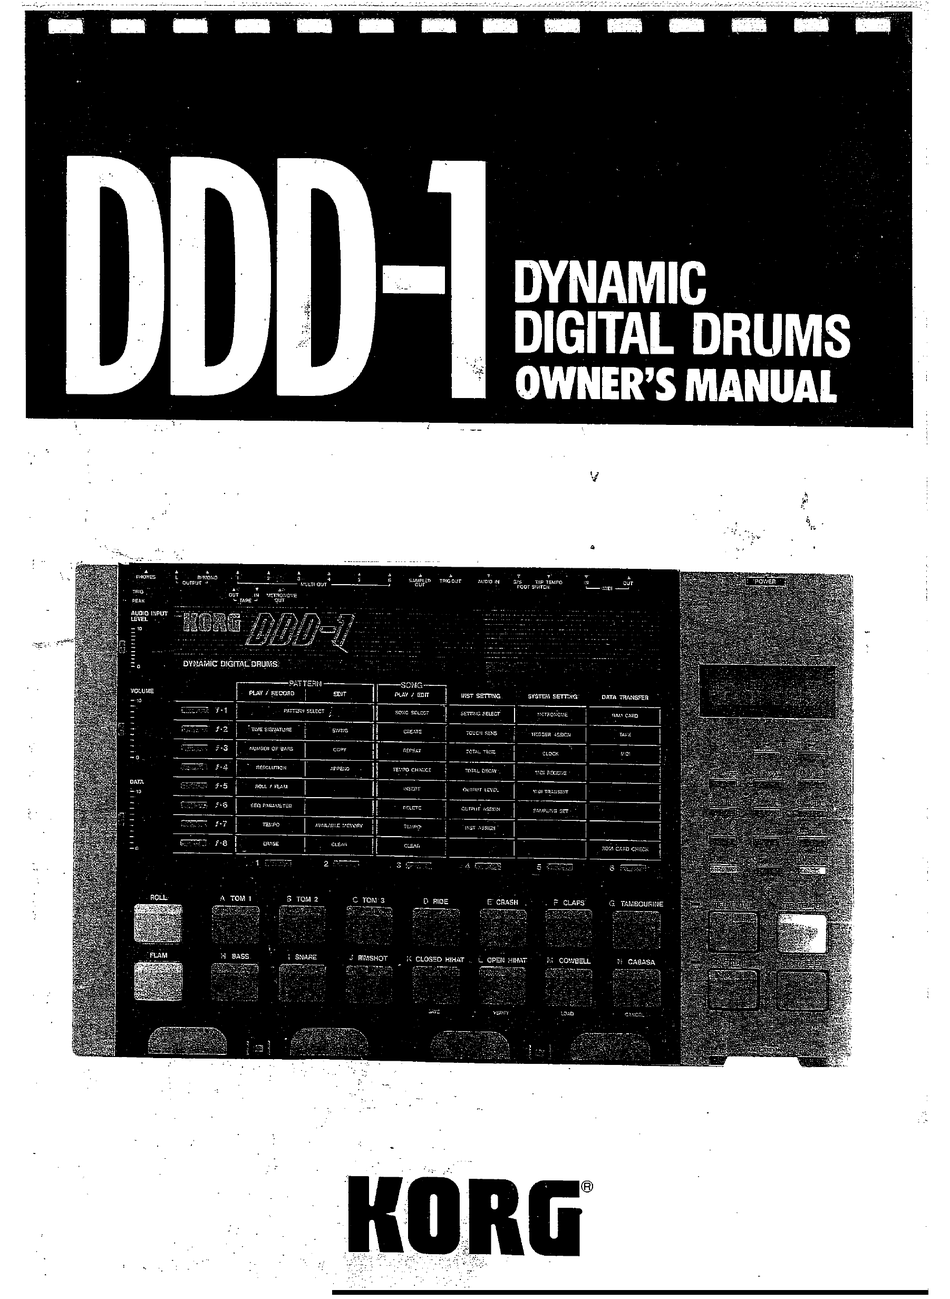 KORG DDD-1 OWNER'S MANUAL Pdf Download | ManualsLib